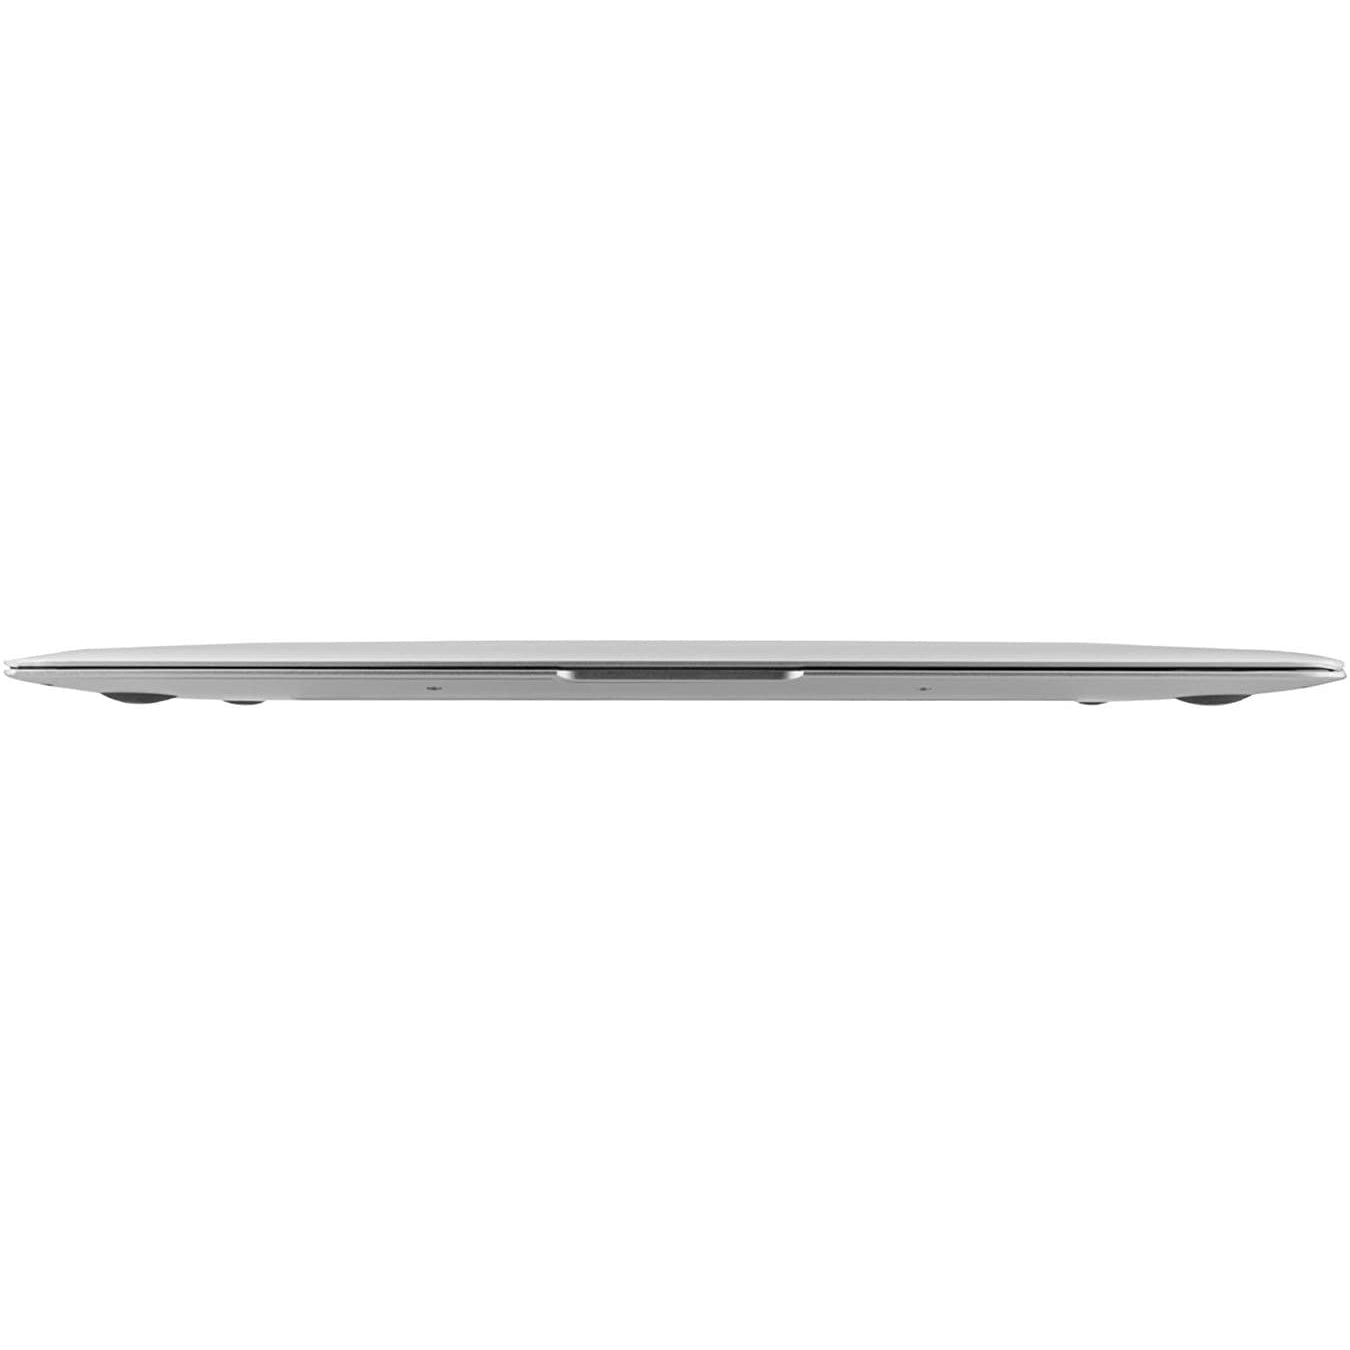 Apple MacBook Air 11.6'' MJVM2LL/A (2015) Laptop, Intel Core i5, 4GB RAM, 128GB, Silver - Refurbished Excellent